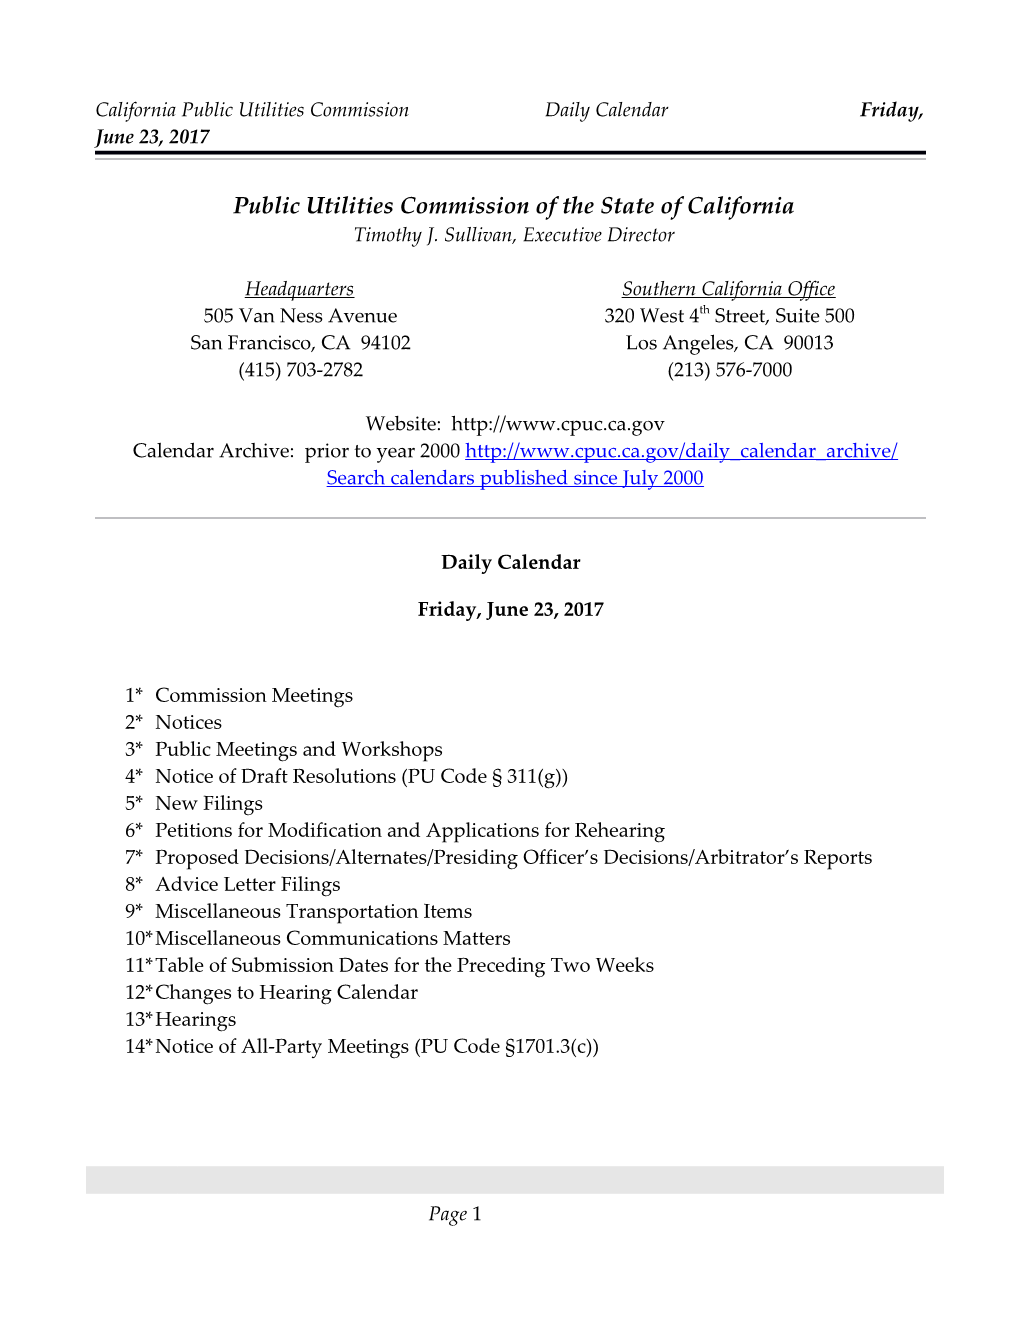 California Public Utilities Commission Daily Calendar Friday, June 23, 2017